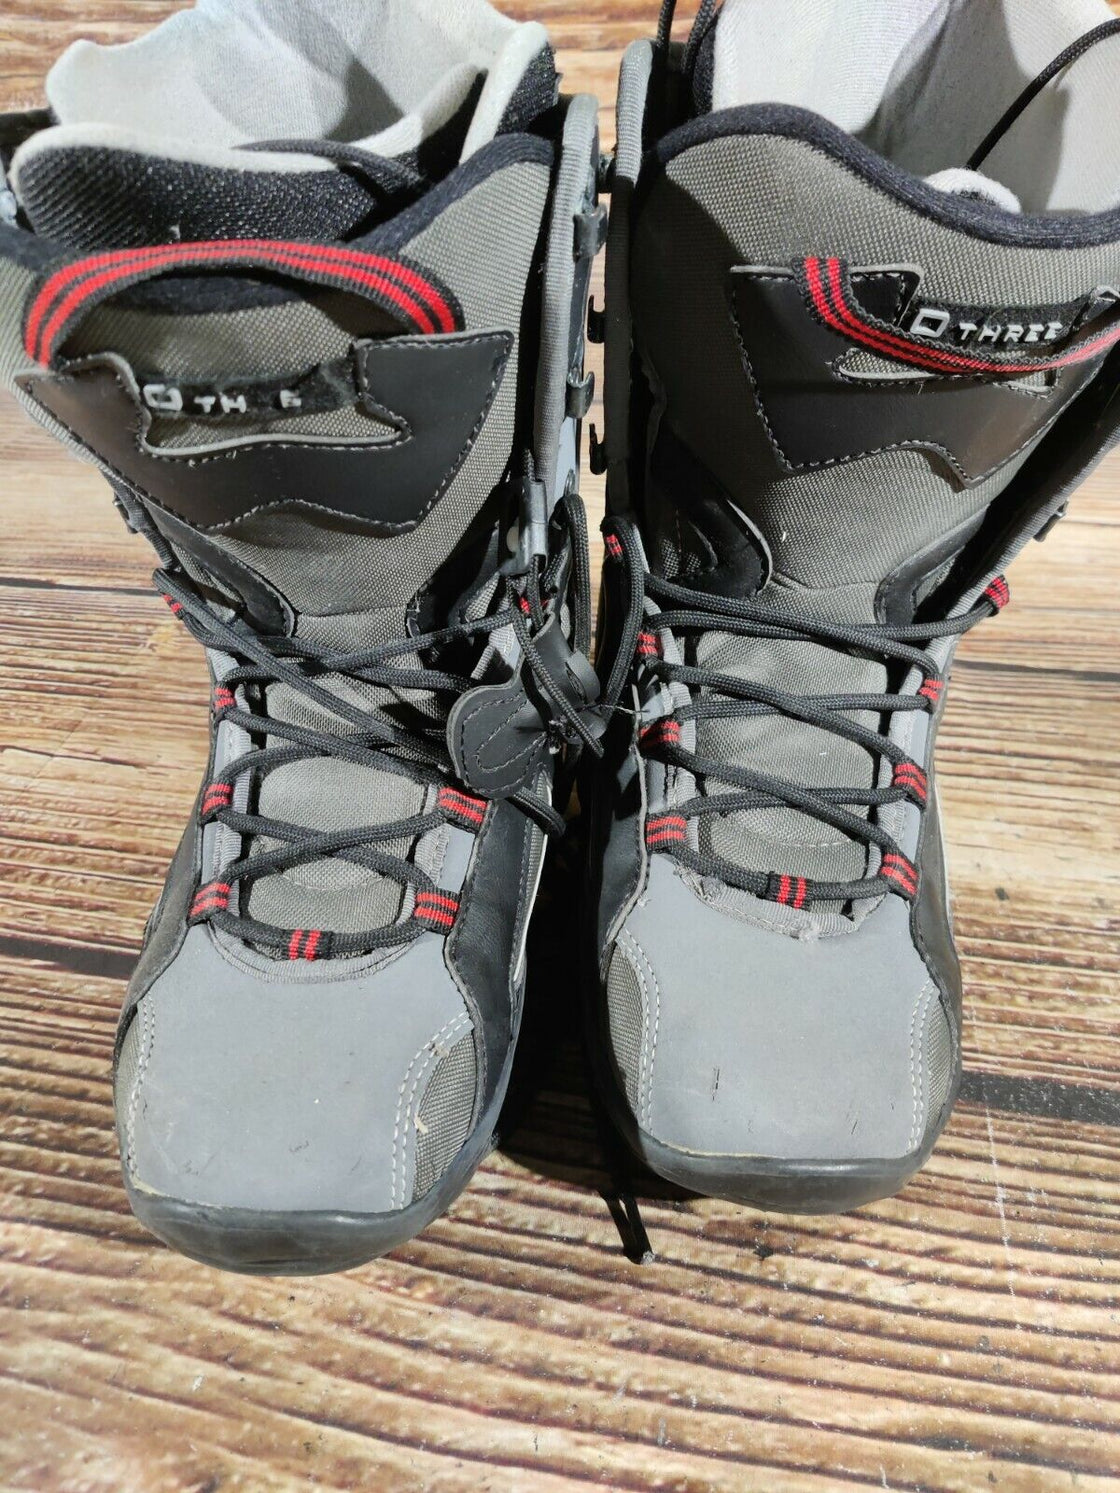 O-Three Snowboard Boots Retro Vintage  Size EU42, US9, UK8, Mondo 270  C